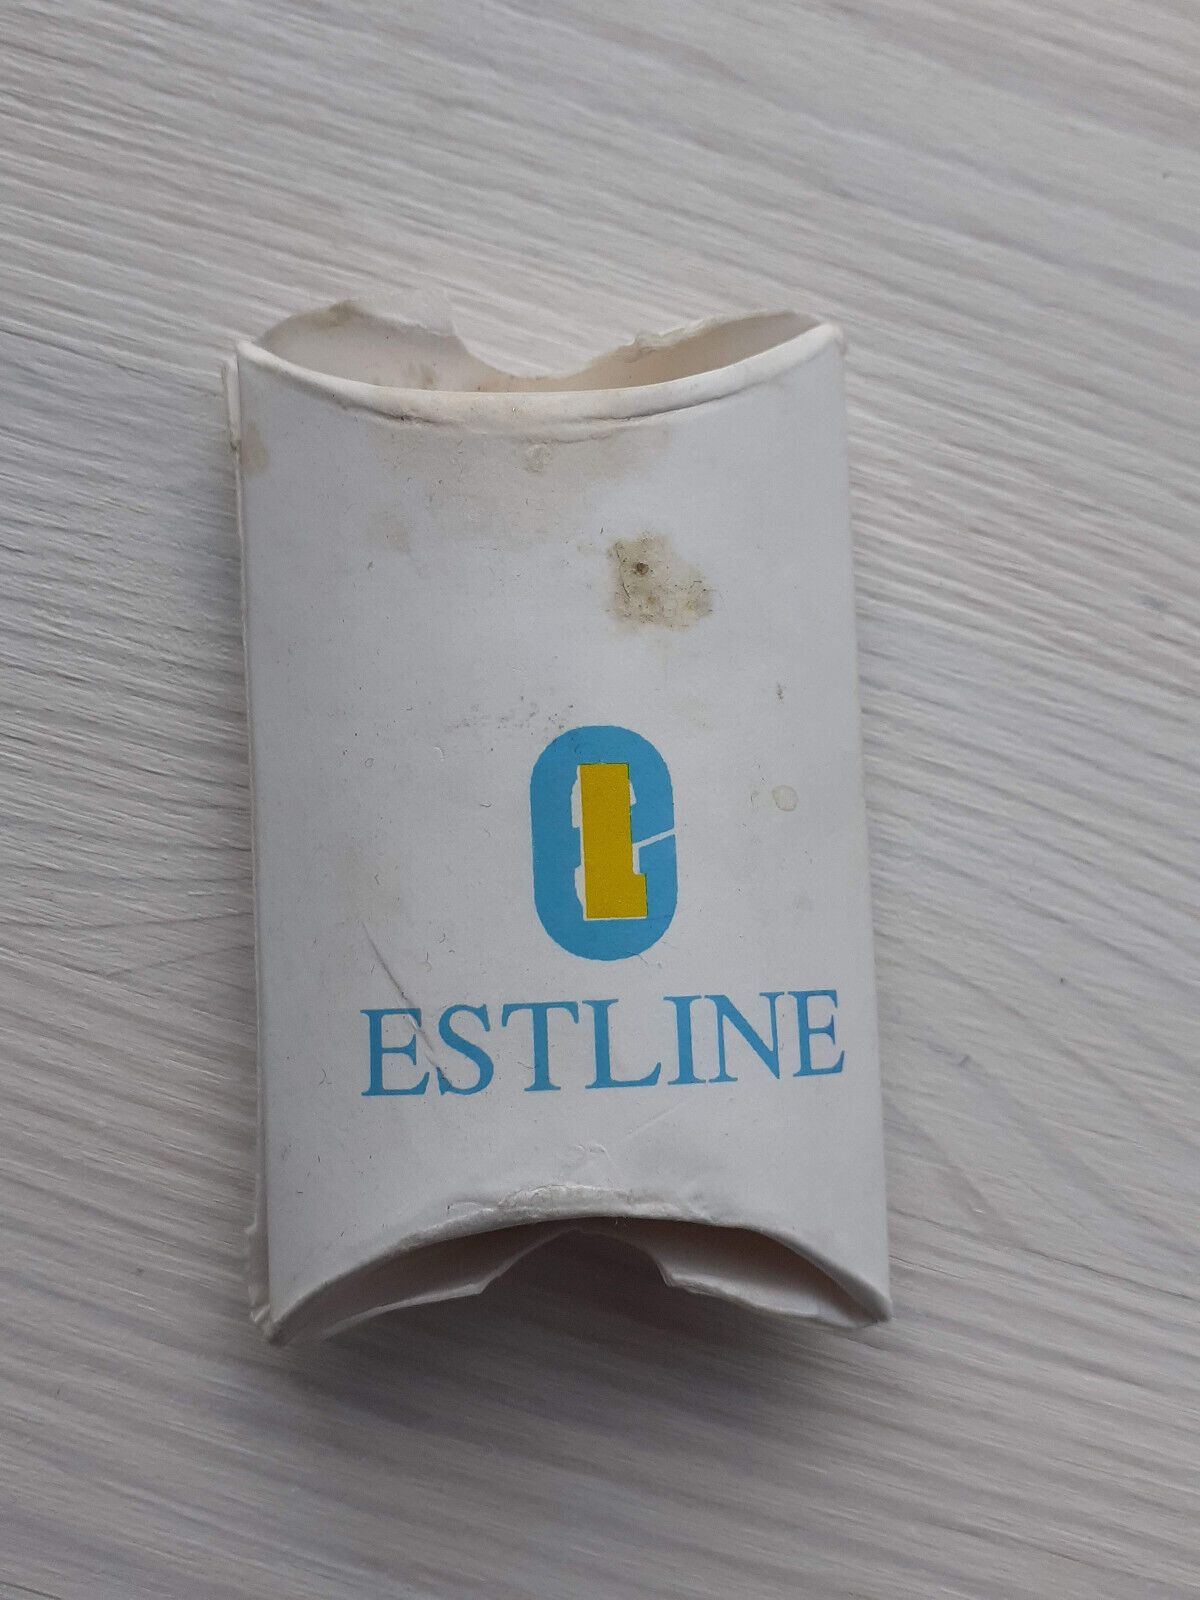 Estline Soap in original box, EstLine went bankrupt in 2001